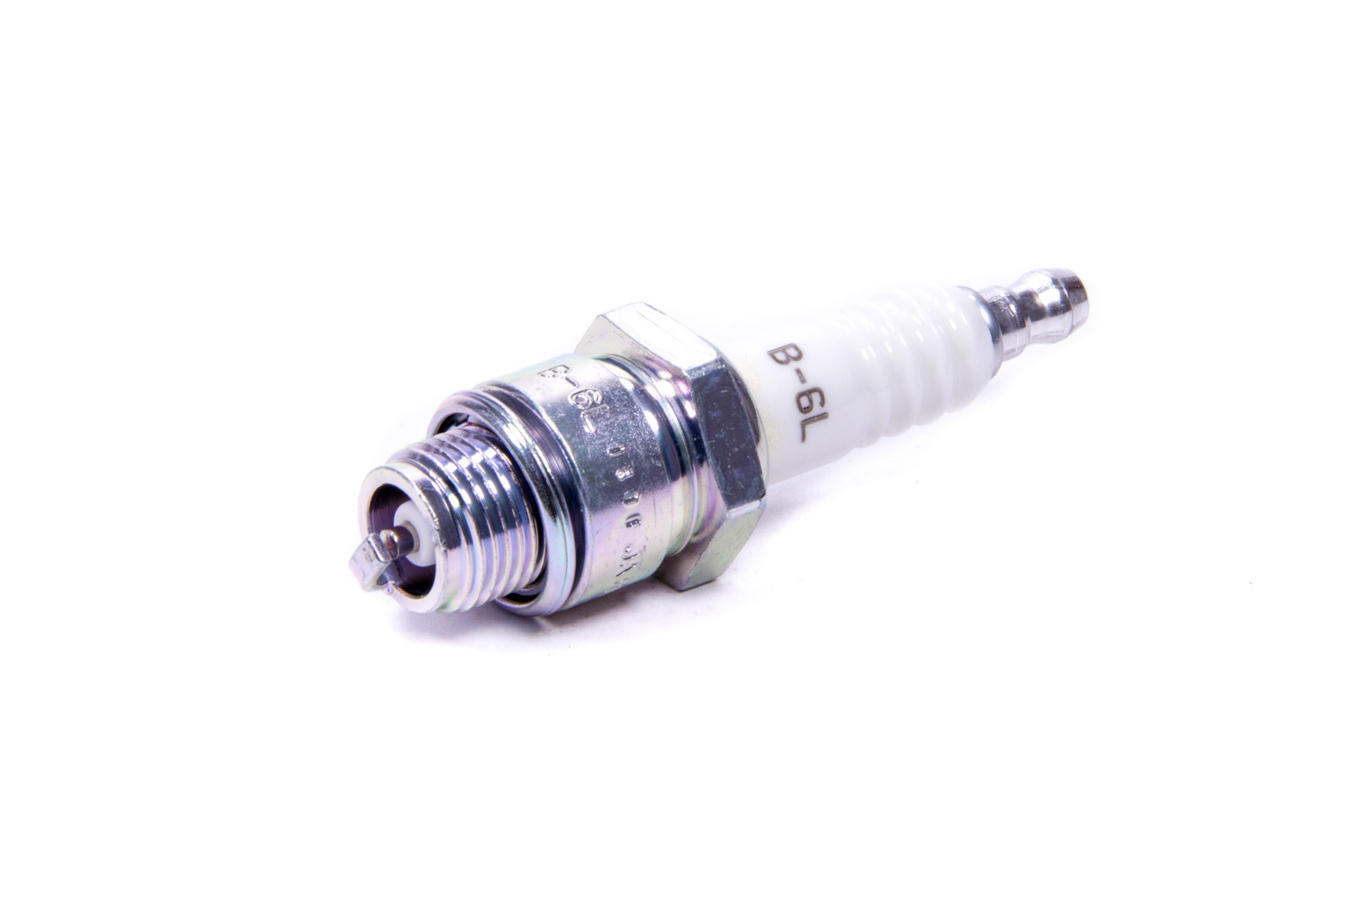 NGK B6L Spark Plug, NGK Standard, 14 mm Thread, 0.441 in Reach, Gasket Seat, Stock Number 3212, Non-Resistor, Each